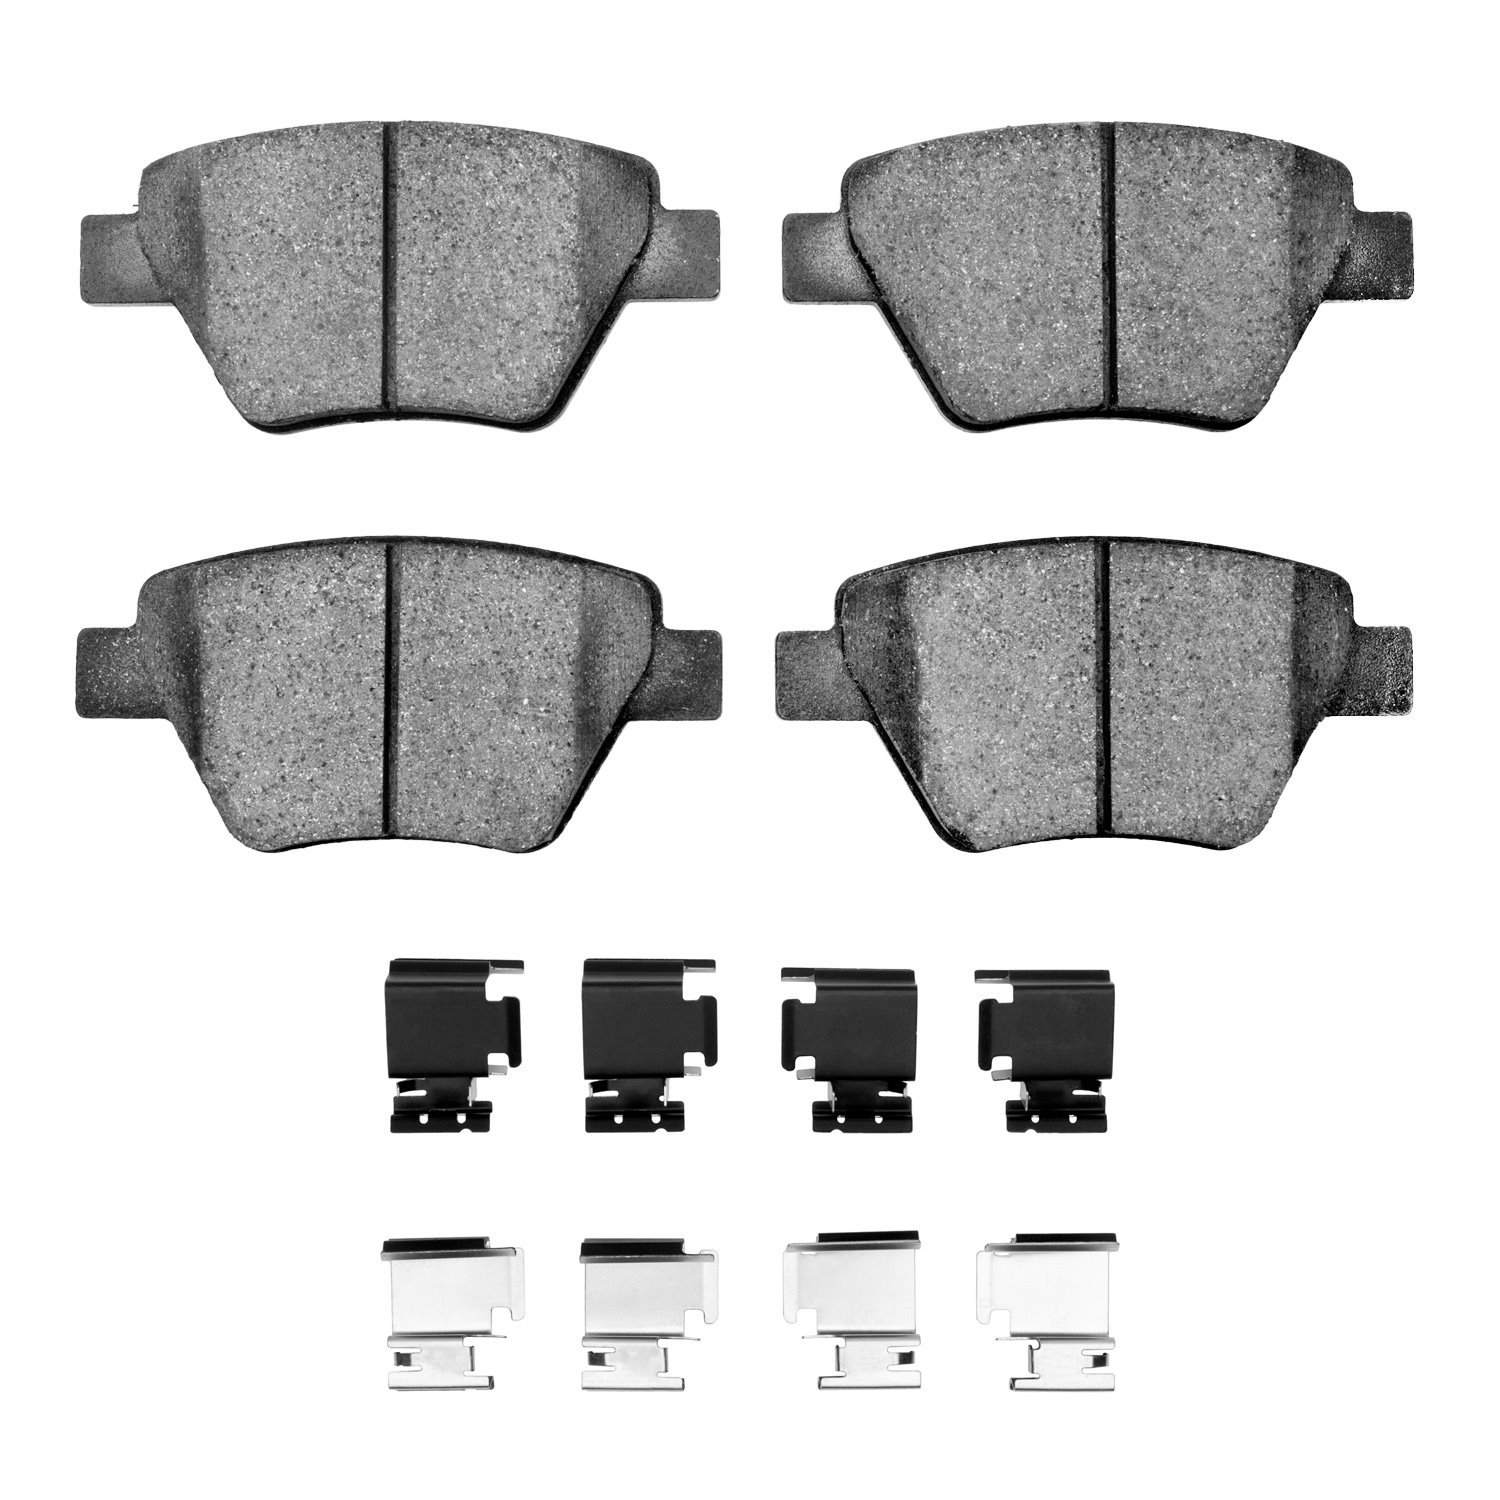 1600-1456-01 5000 Euro Ceramic Brake Pads & Hardware Kit, 2005-2016 Audi/Volkswagen, Position: Rear